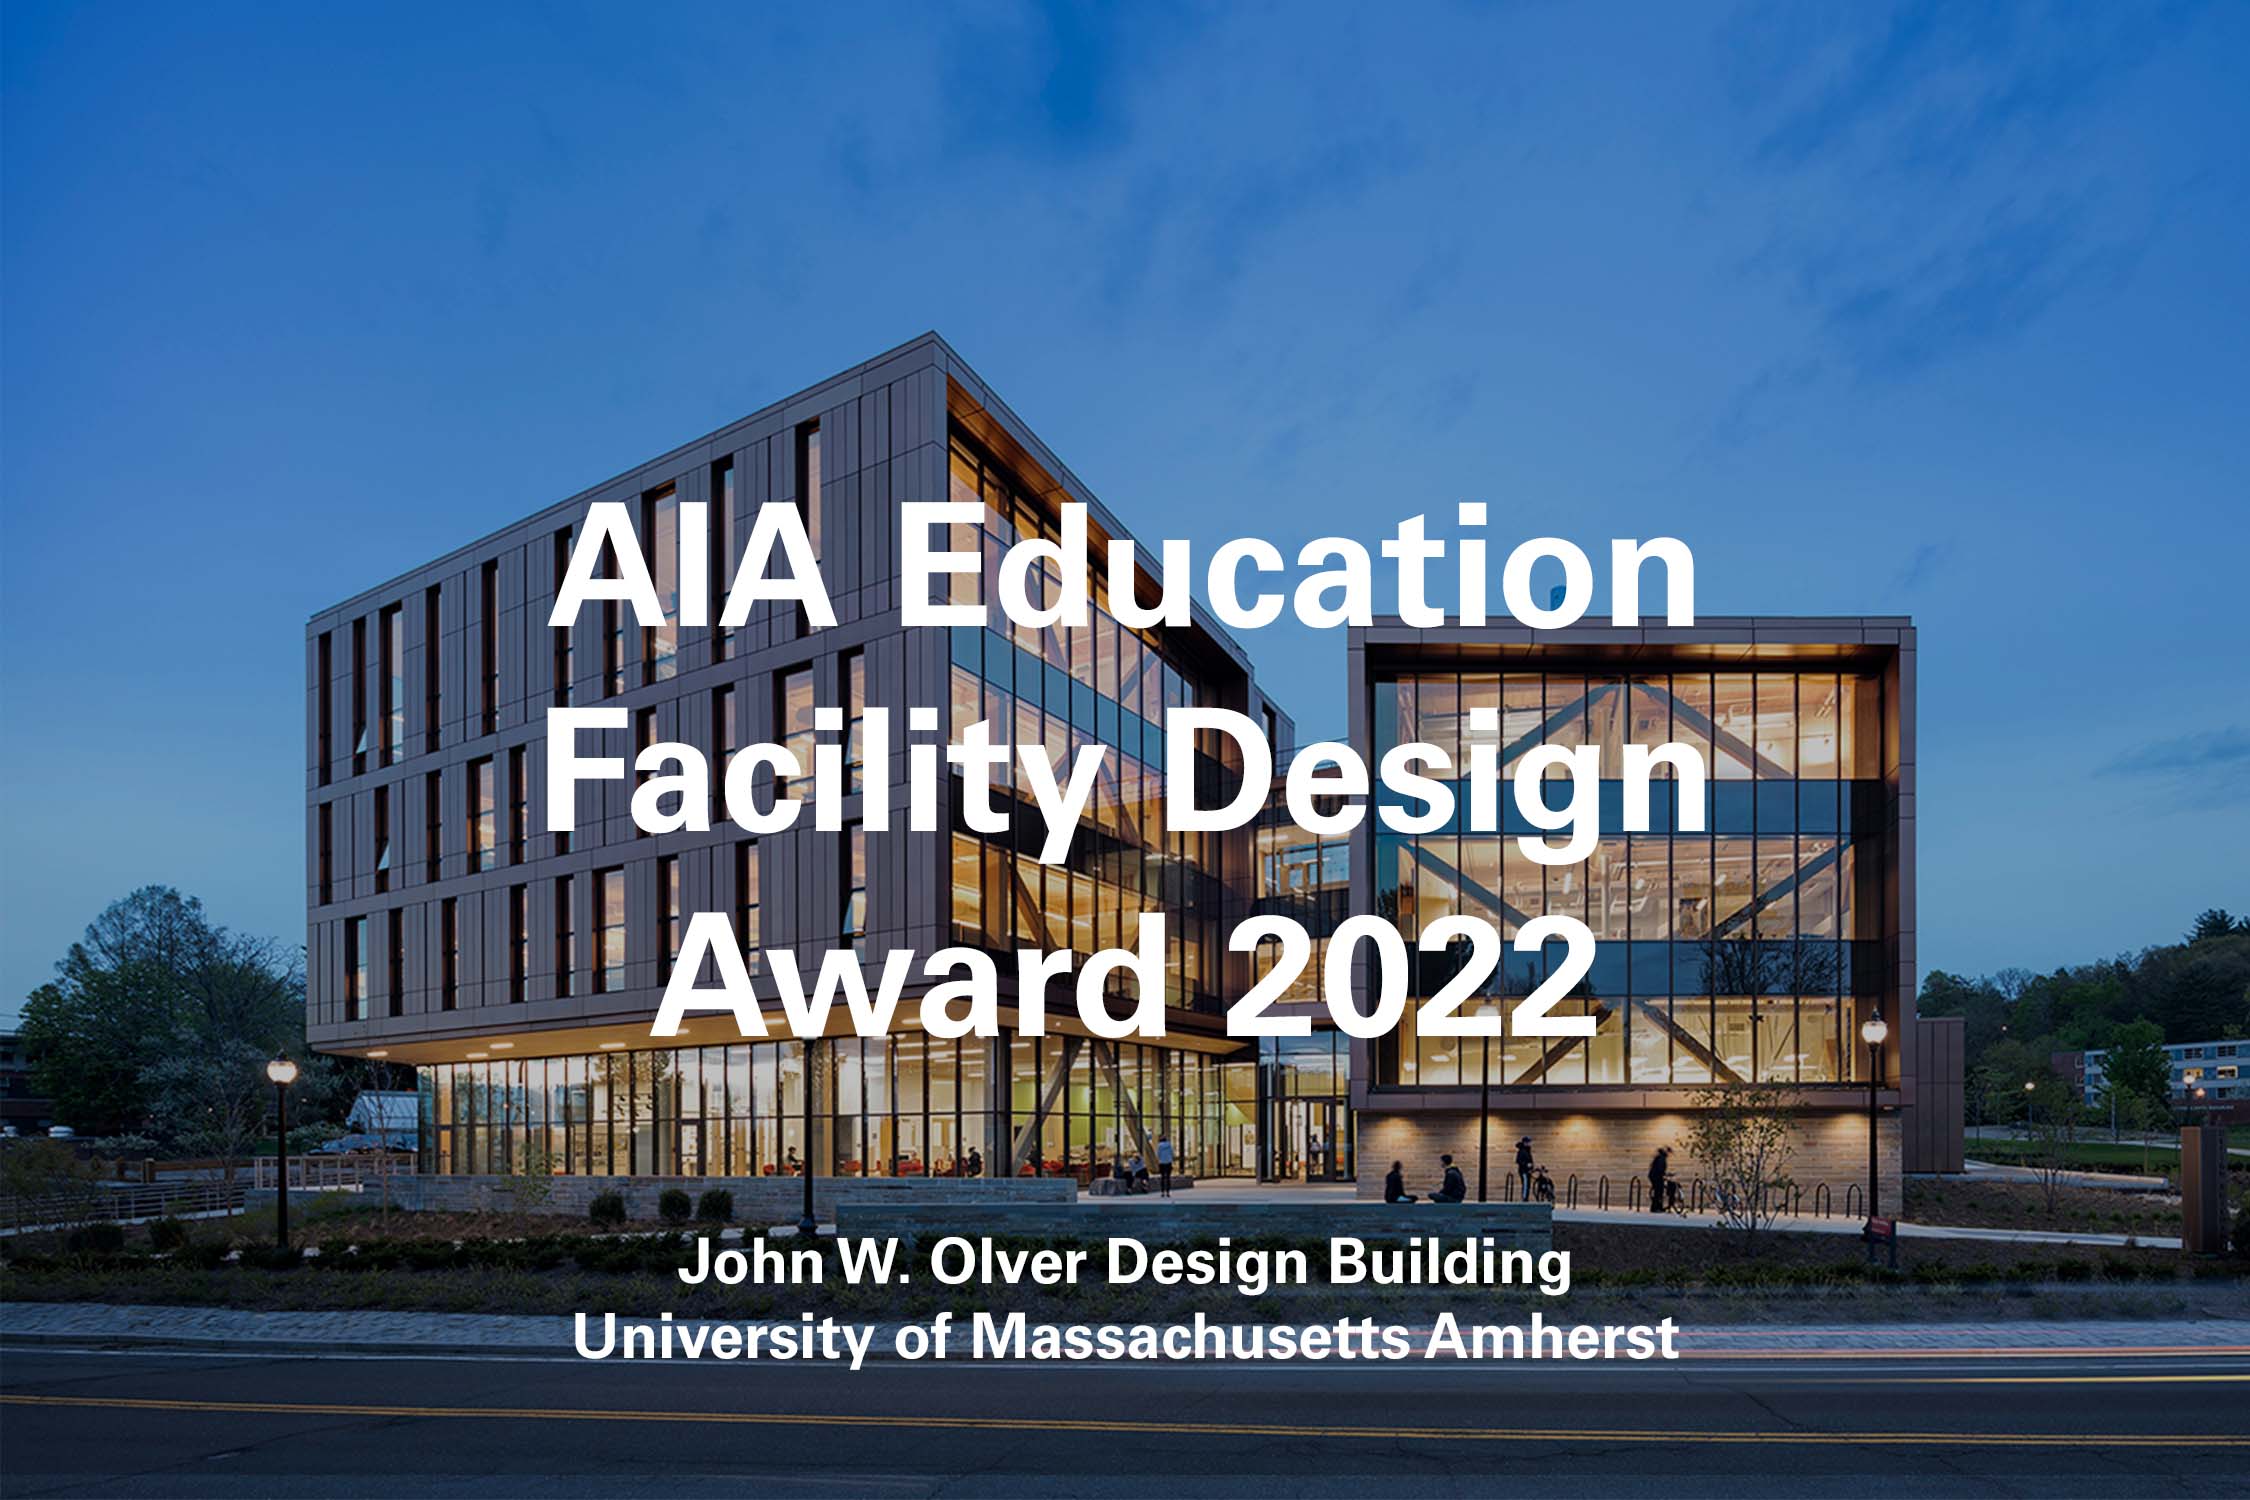 2022 AIA Education Facility Design Award honors John W. Olver Design